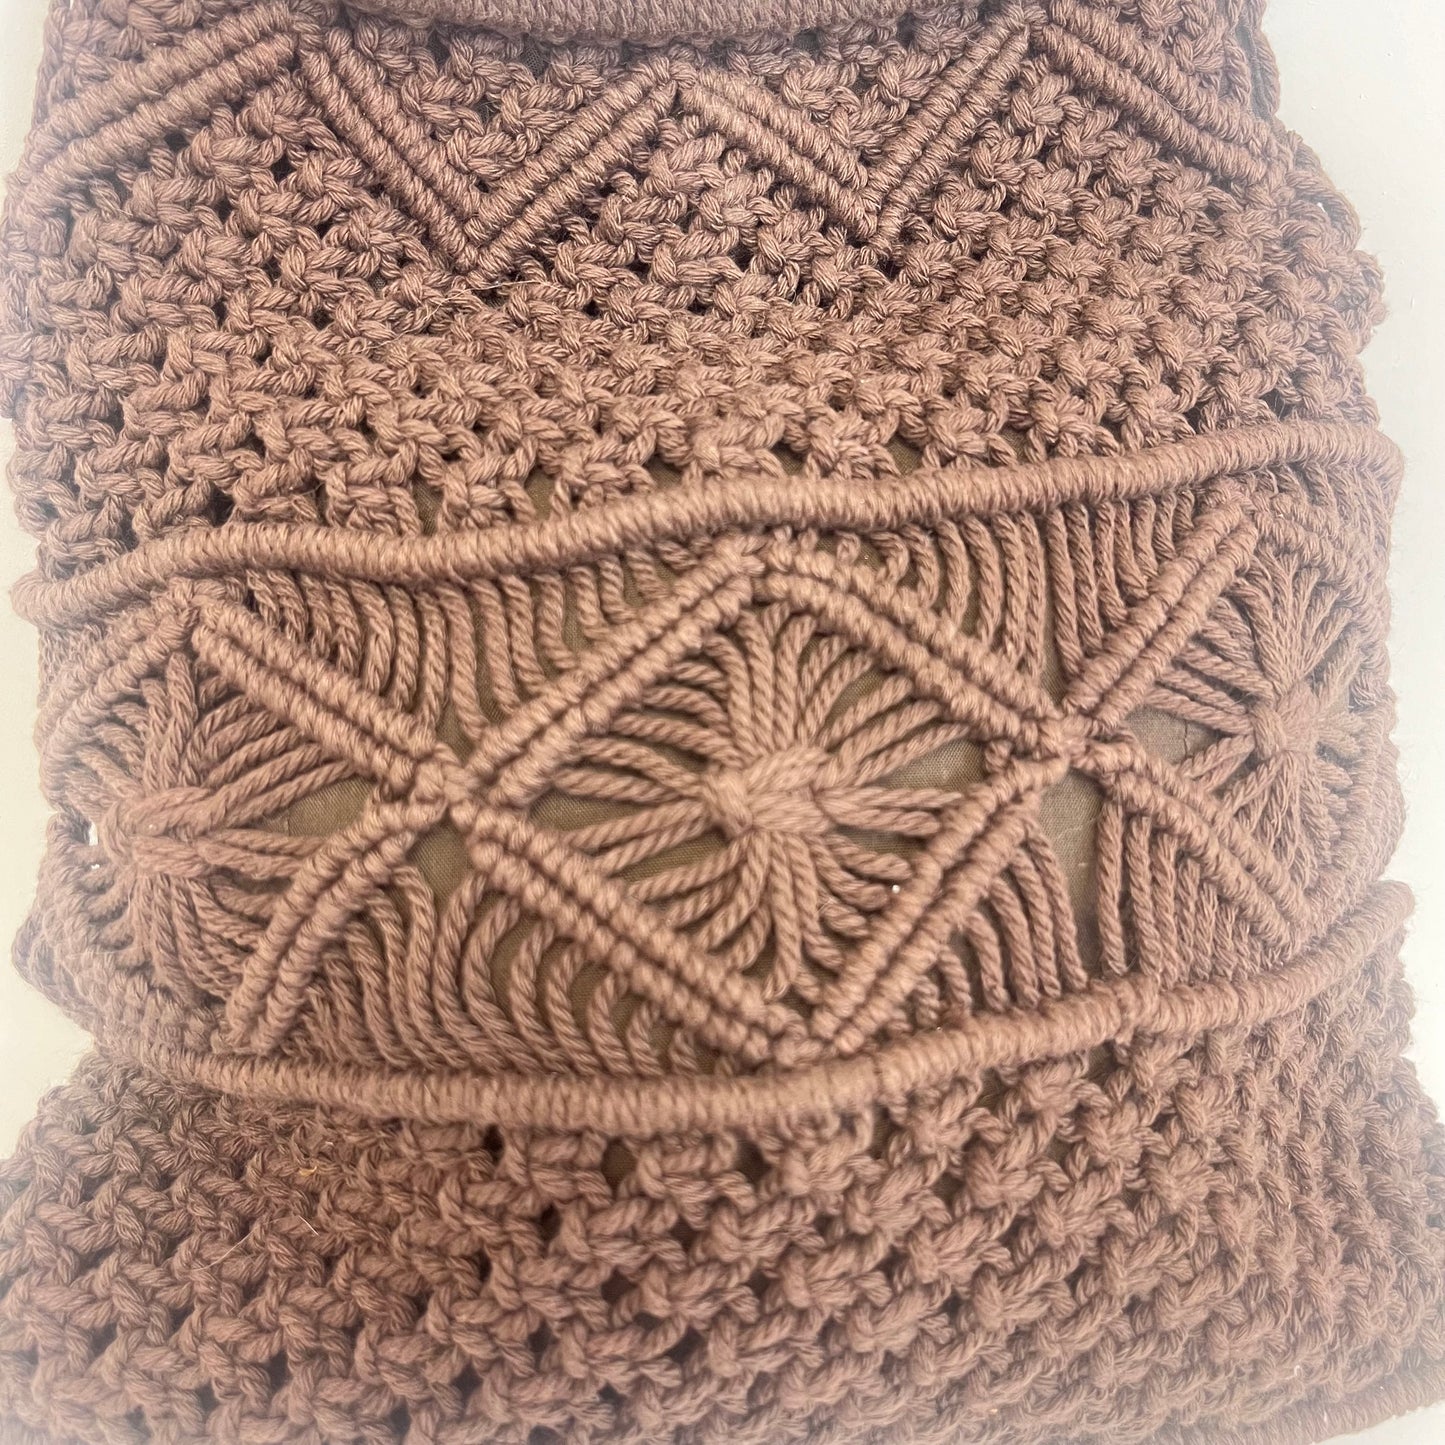 New York & Company Brown Crochet Macramé Handbag Boho Retro